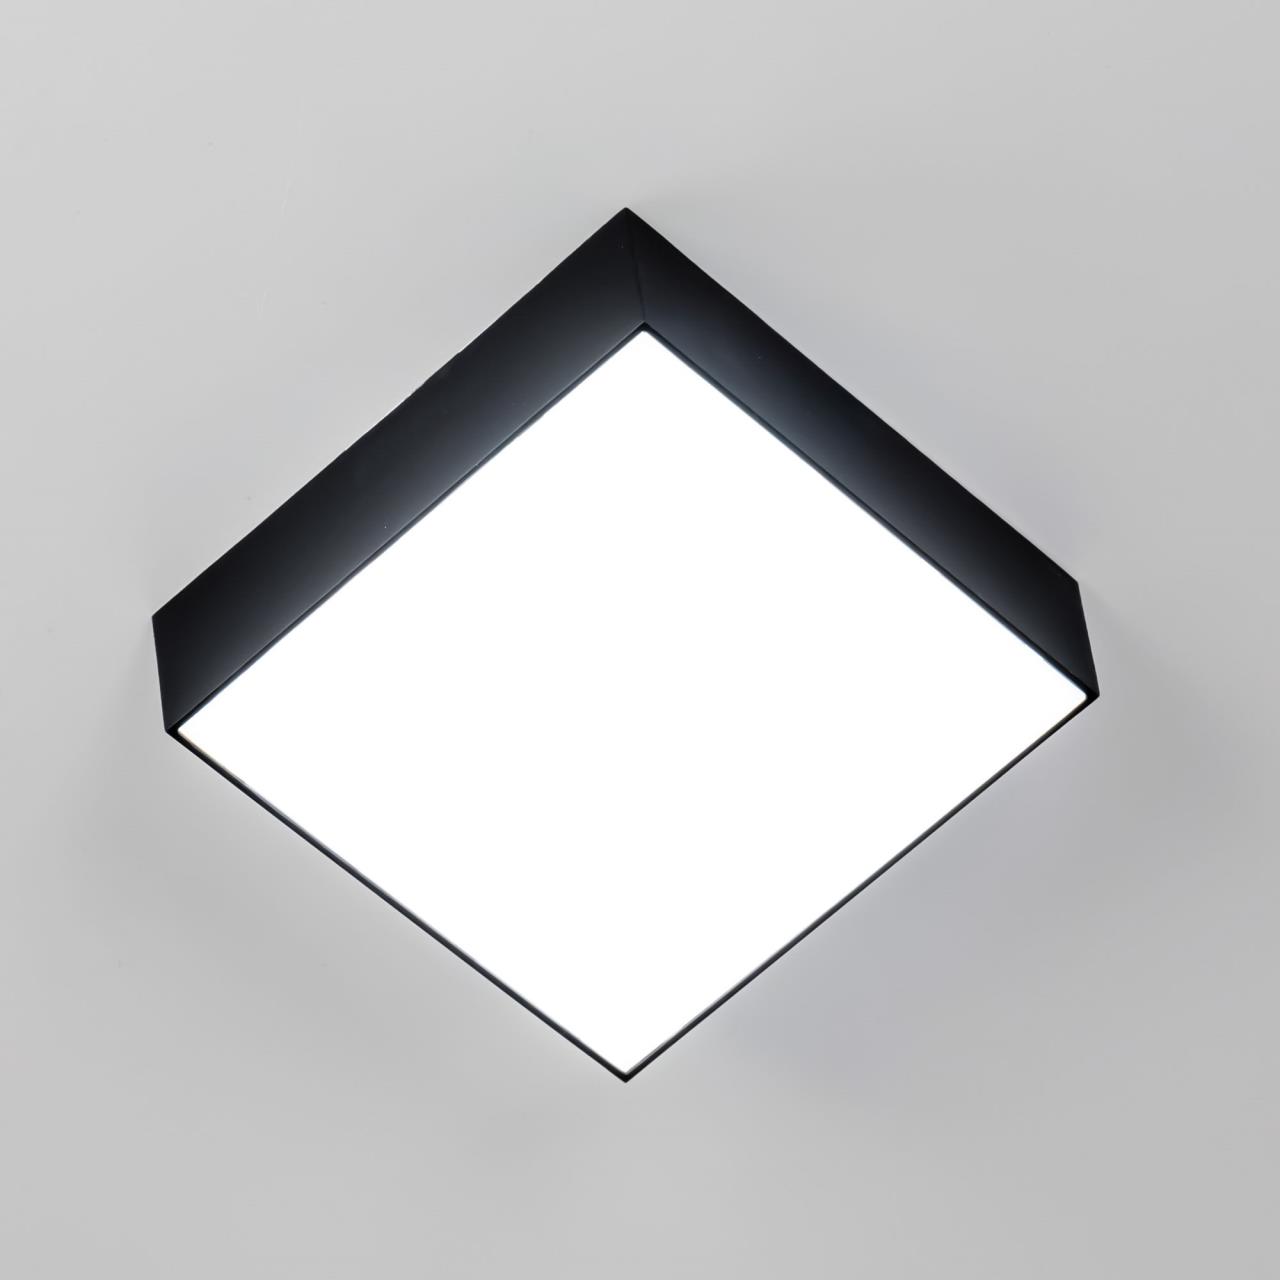 Накладной светильник Citilux Тао CL712X122N в #REGION_NAME_DECLINE_PP#